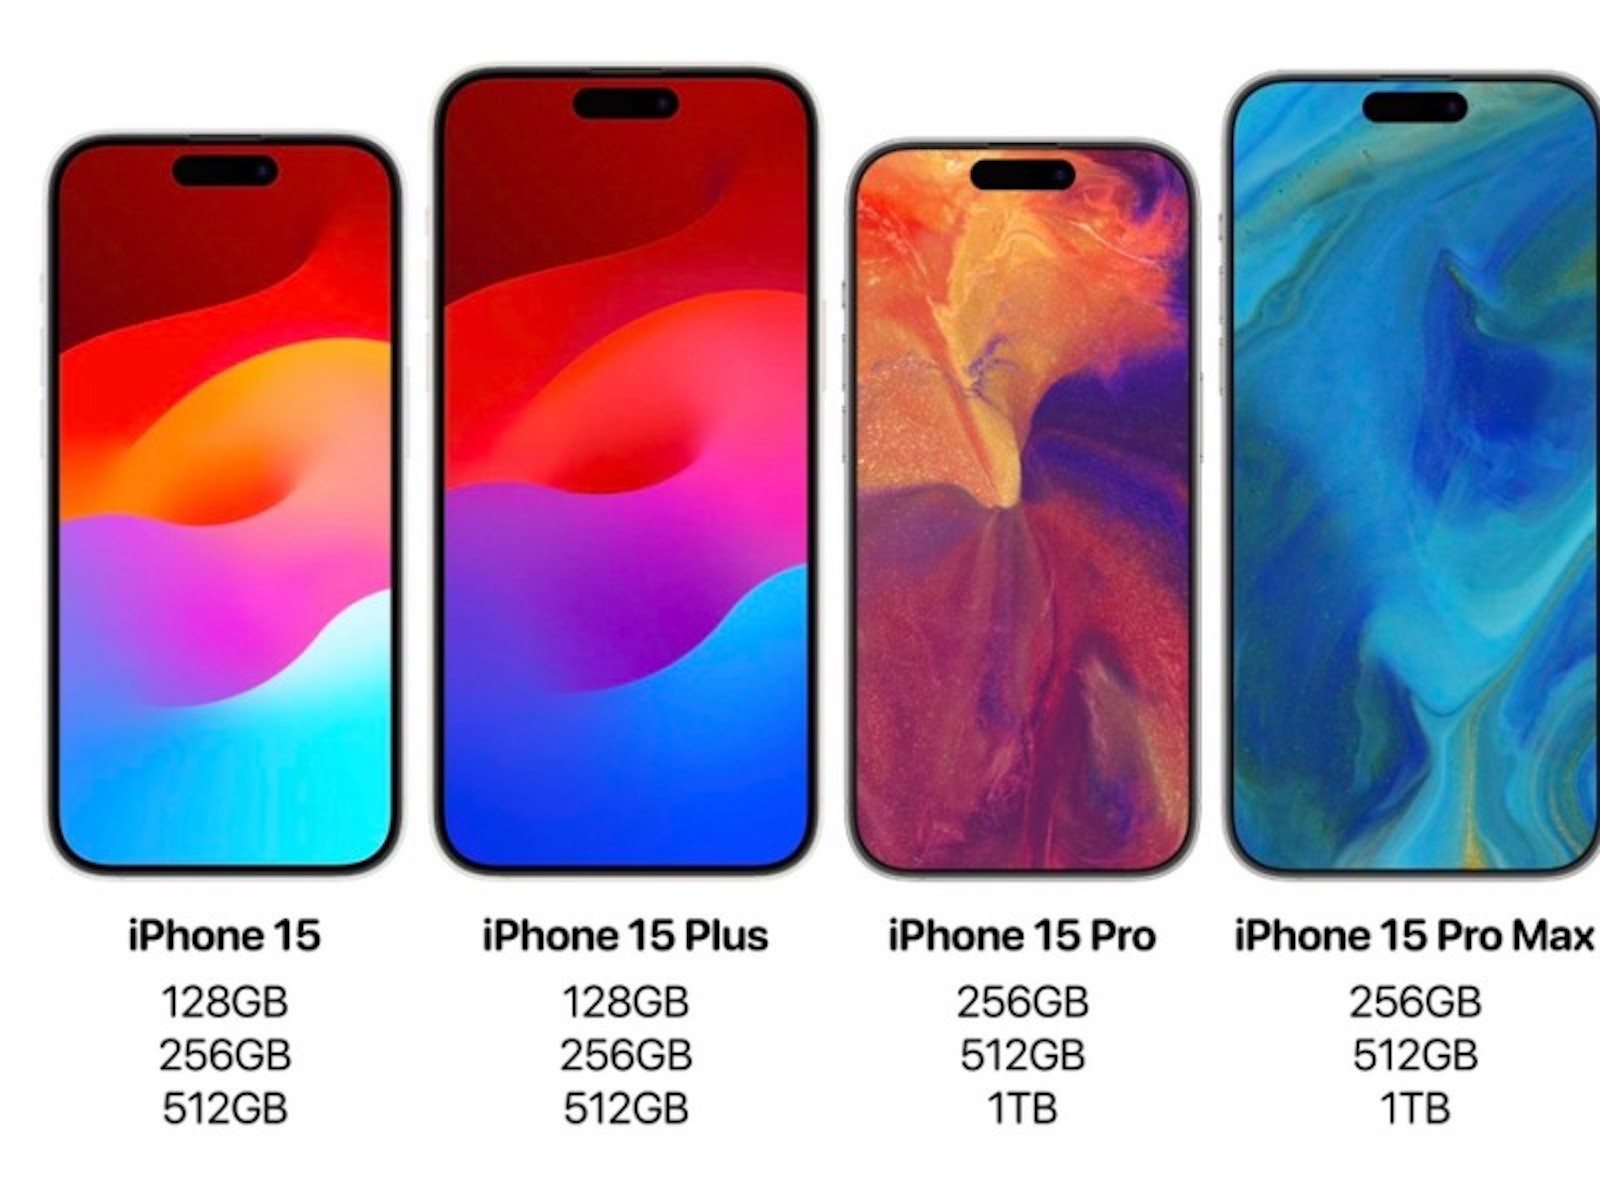 Iphone15 series storage options